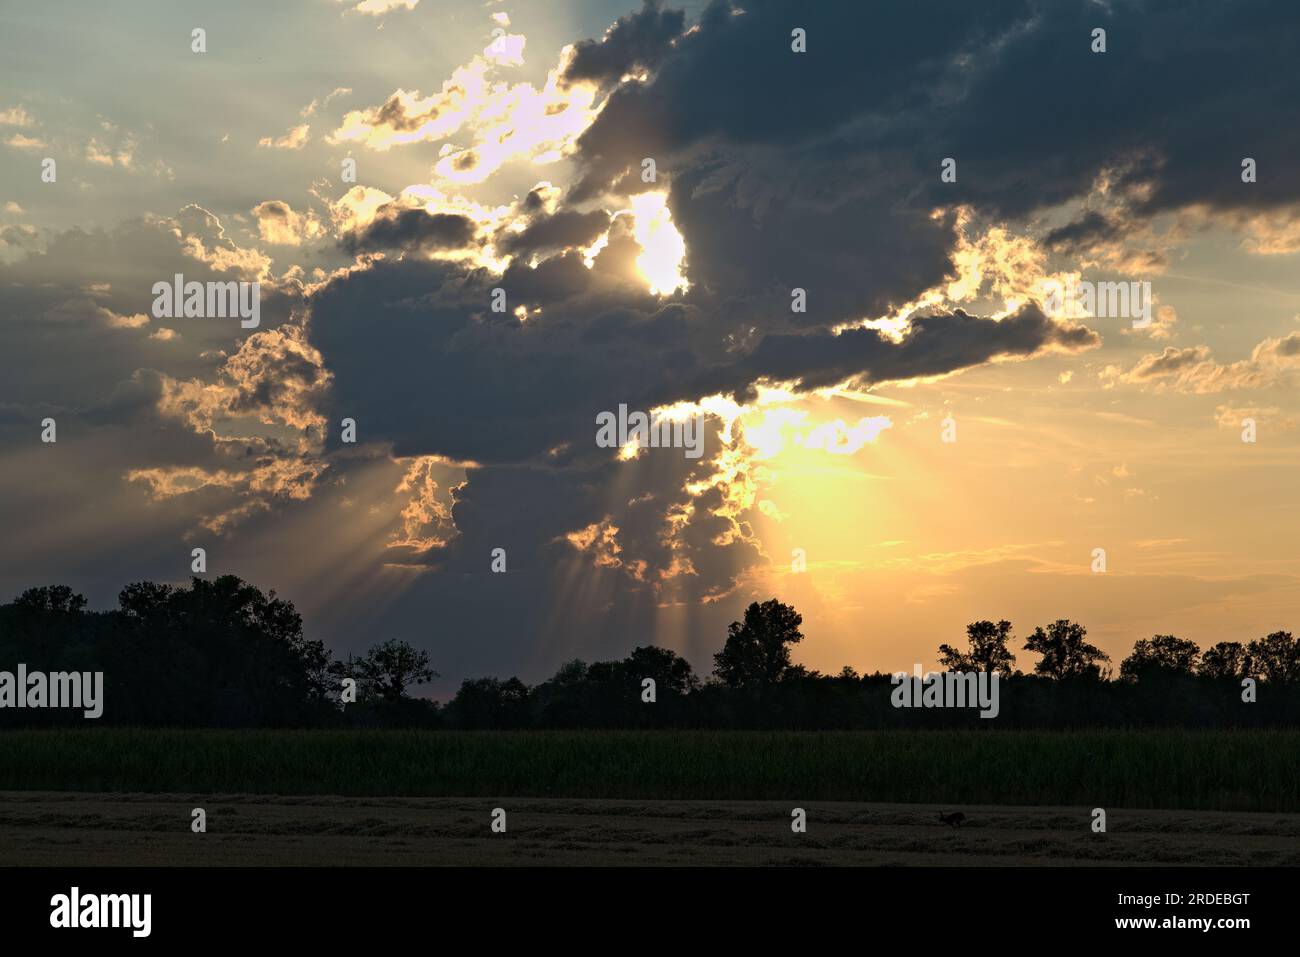 Beautyful Sunset with view on unusual clouds. Photo was taken in Munich during harvest on Würmkanal (Regattastrecke) Stock Photo